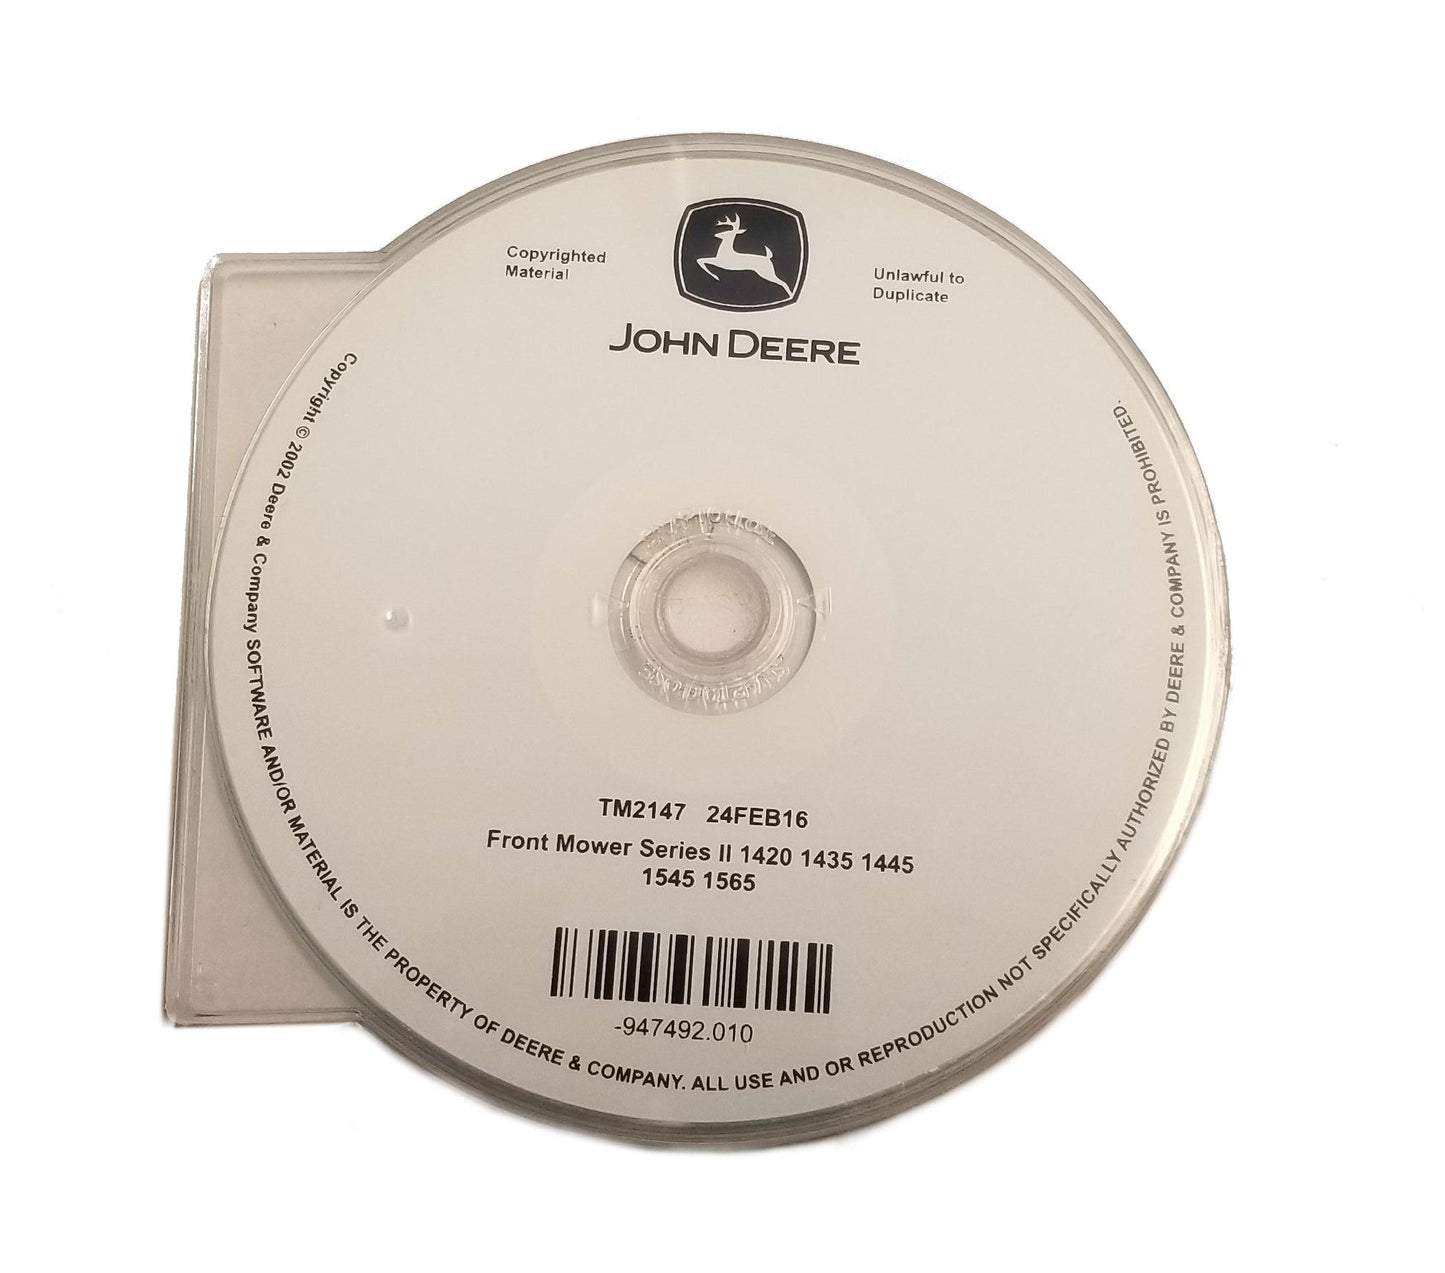 John Deere 1420/1435/1445/1545/1565 Series II Front Mower Technical Manual CD - TM2147CD